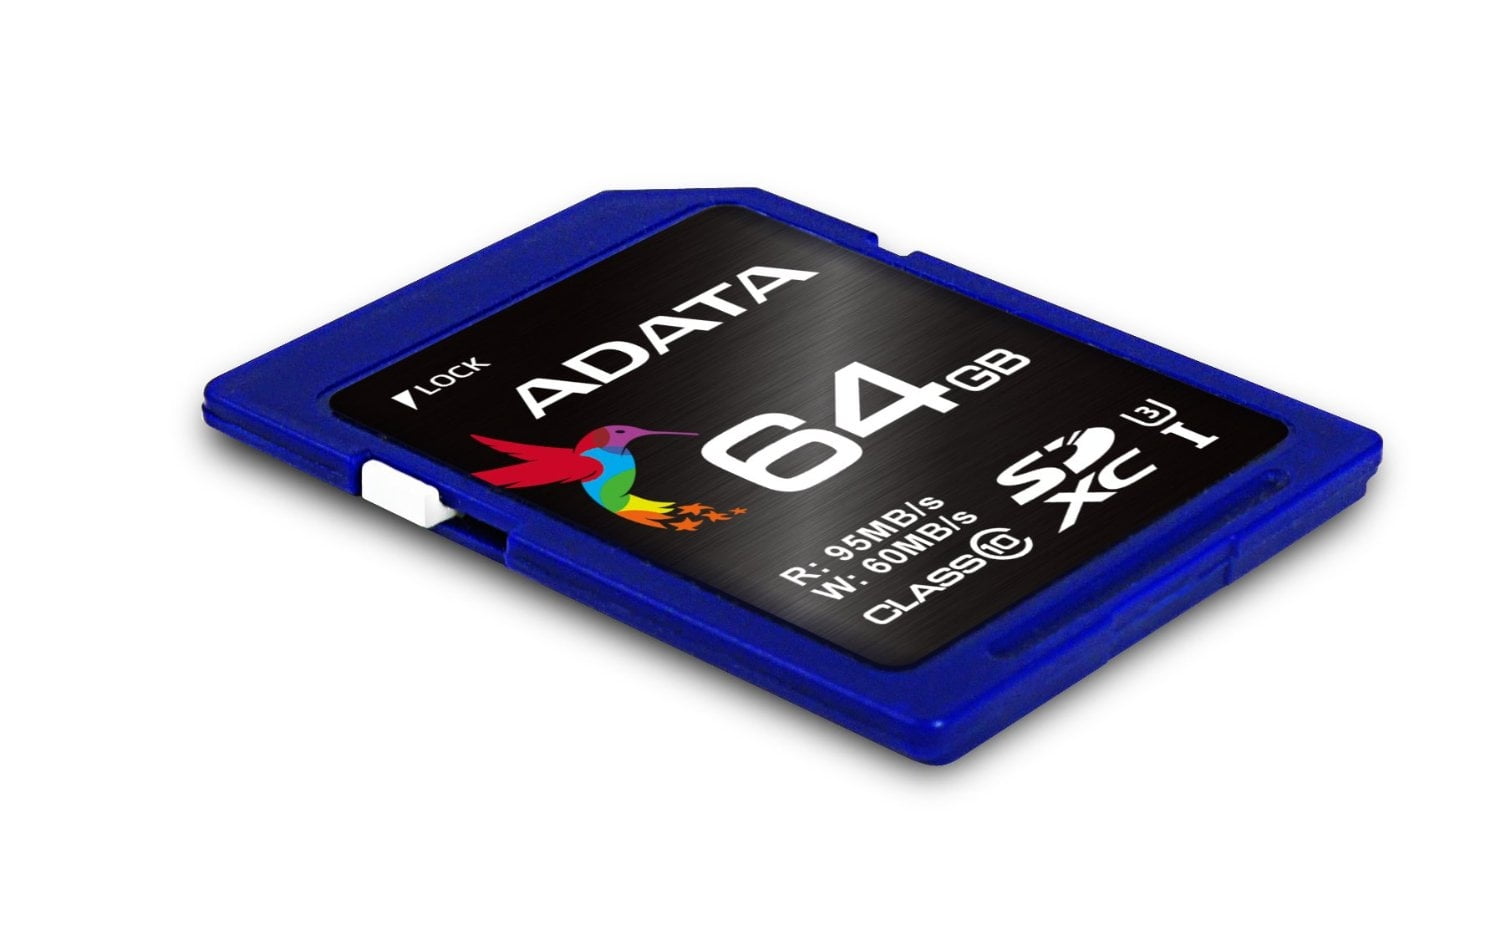 Uhs 3 память. Карта памяти ADATA super SD Duo 1gb 80x. Карта памяти ADATA super SD Card 256mb 80x. Карта памяти ADATA Premier one SDXC UHS-II u3 class 10 64gb. Карта памяти ADATA Premier Pro SDXC UHS-I u3 v30 class 10 (r95/w90) 64gb.